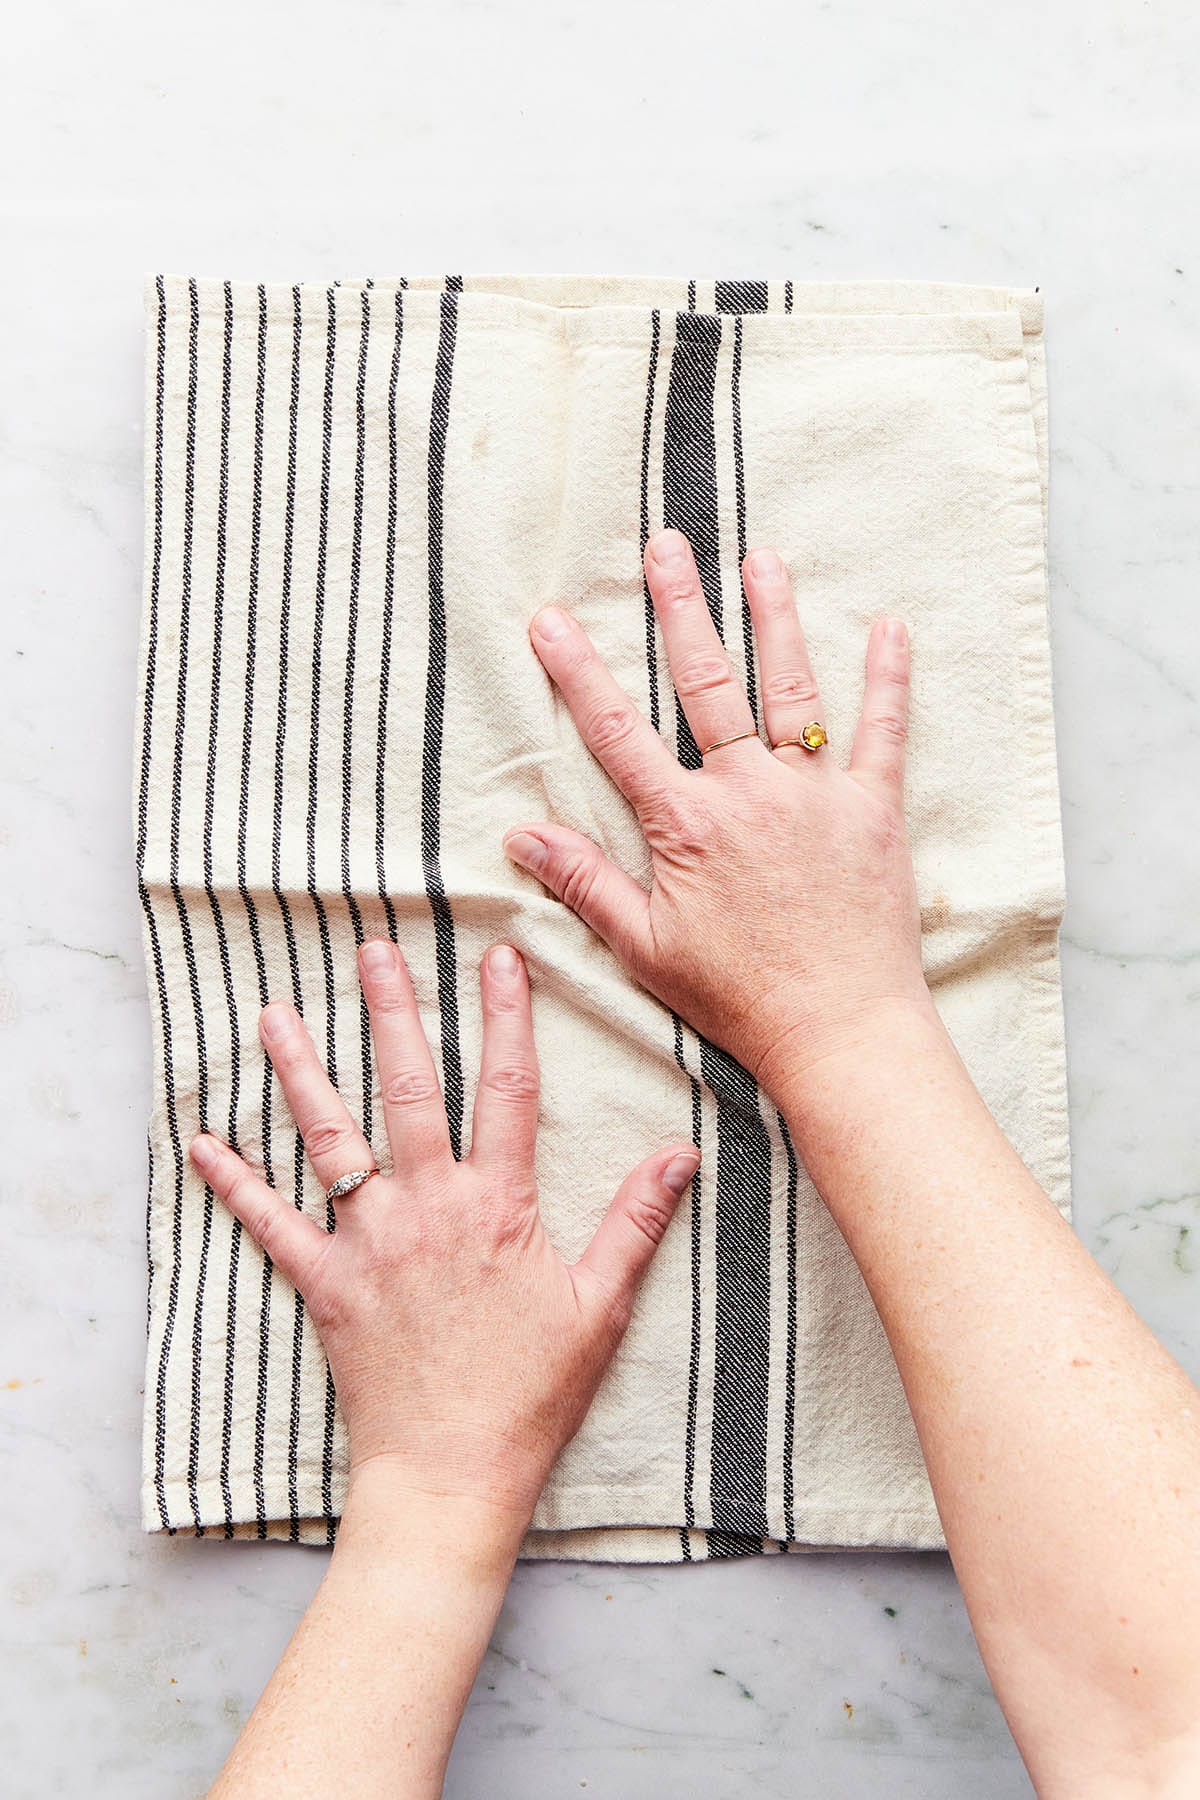 Hands rubbing chickpeas inside a folded tea towel.